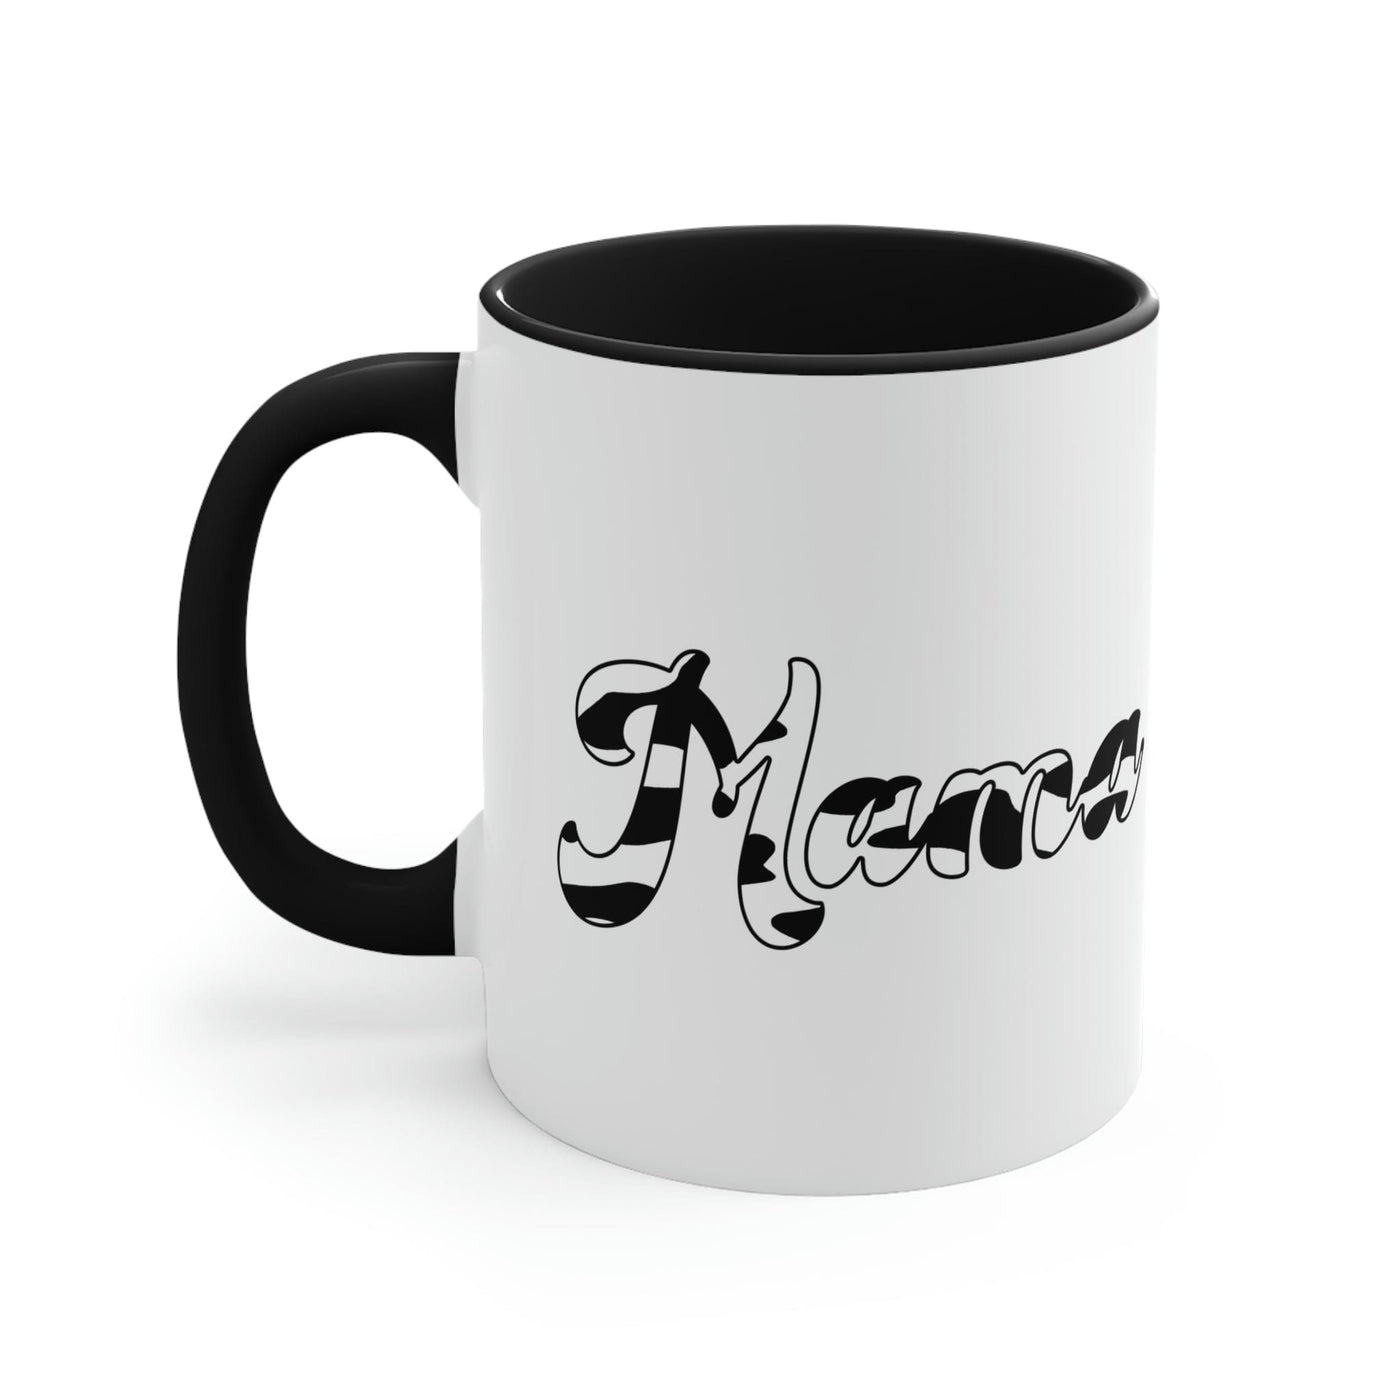 Two-tone Accent Ceramic Mug 11oz Black And White Abstract Mama Illustration